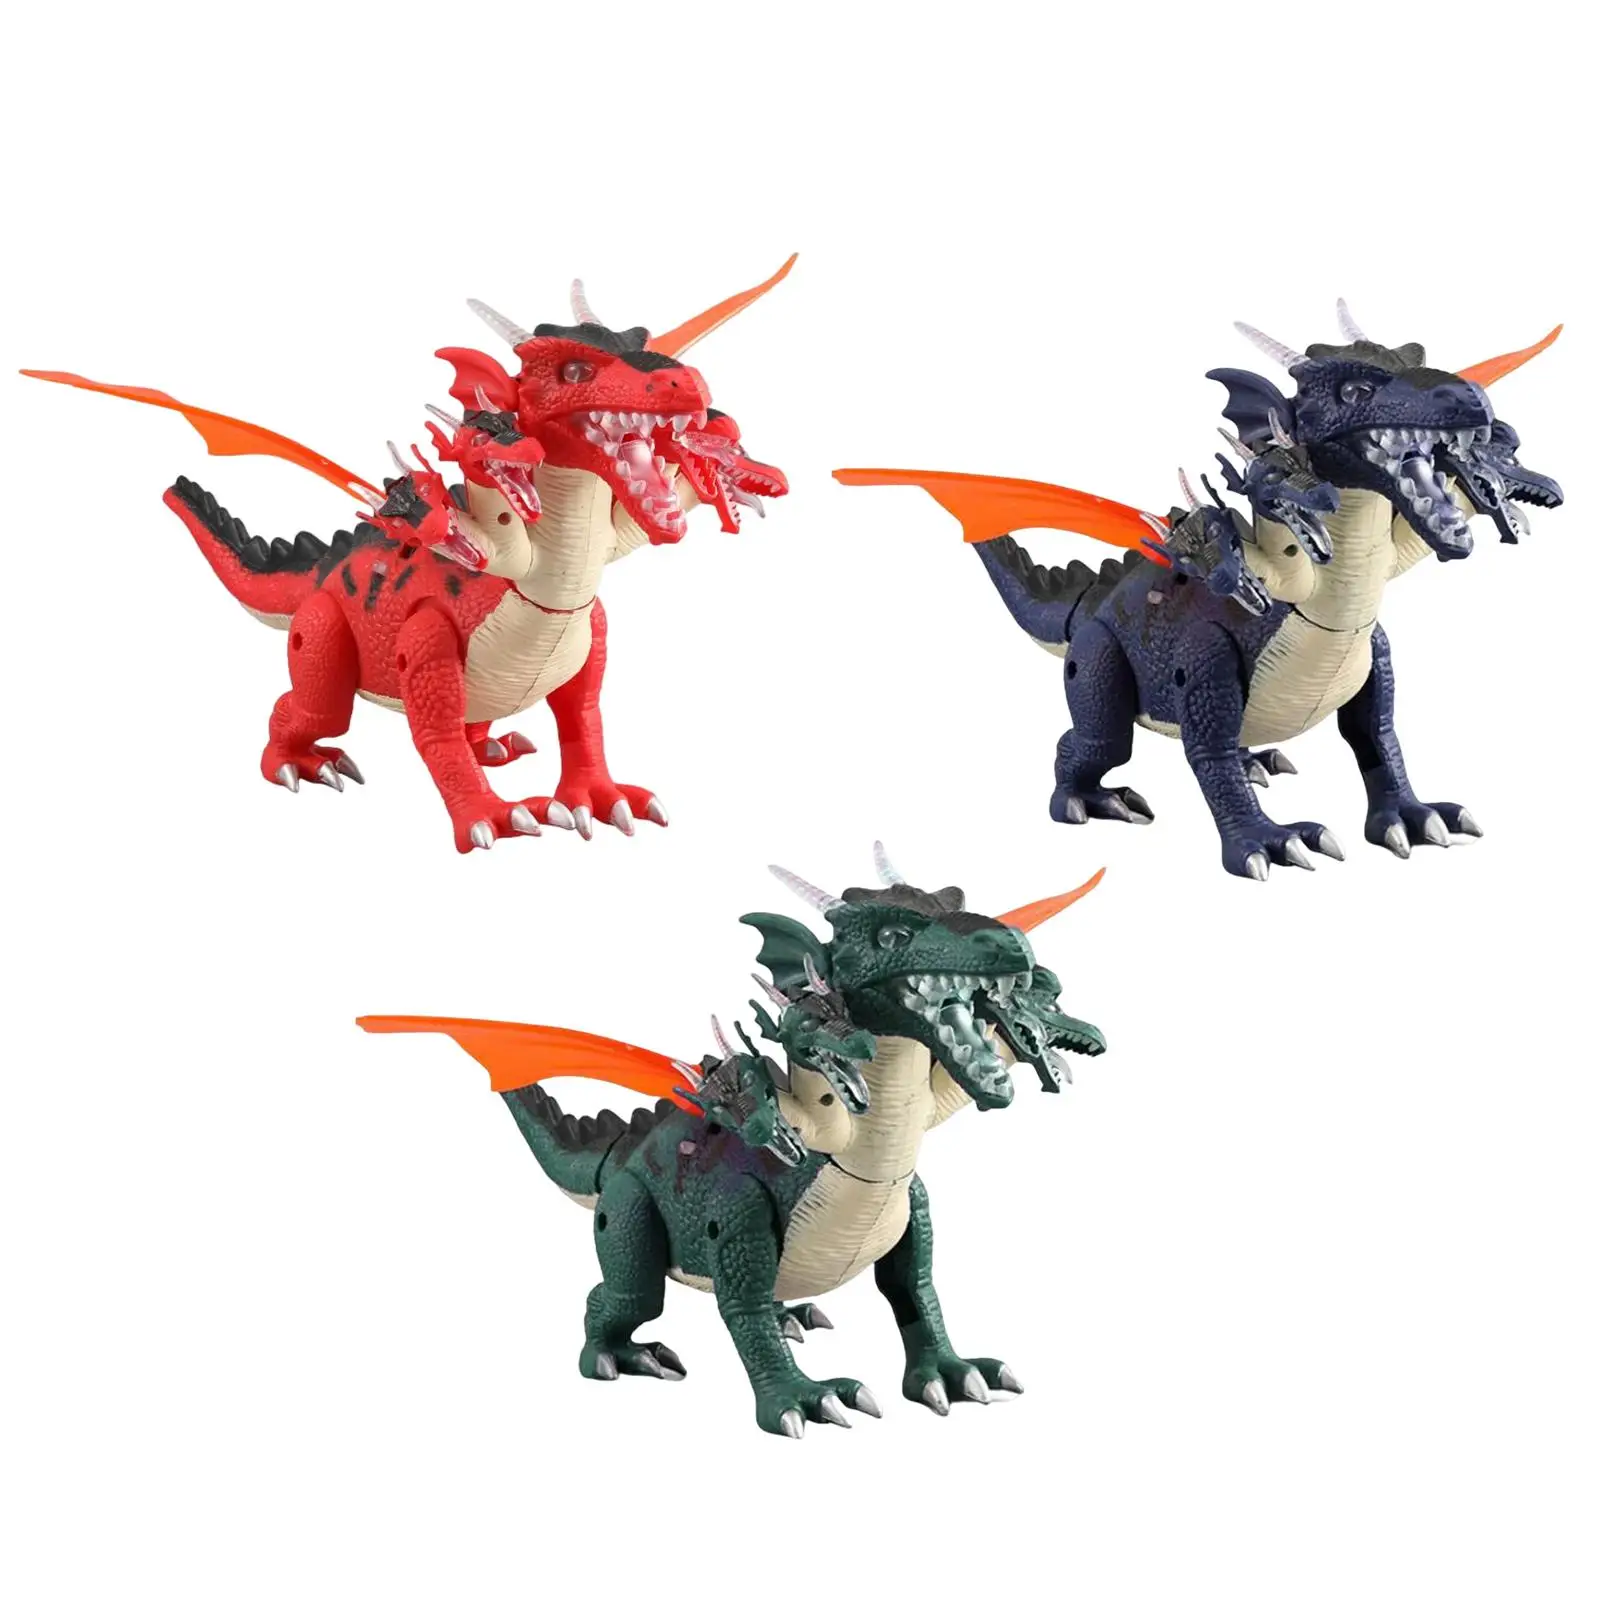 Electronic Dinosaur Toys W/ Lights Roar Sound Walking Robot Dinosaur Flying Dragon Educational Toys Outdoor Birthday Gifts